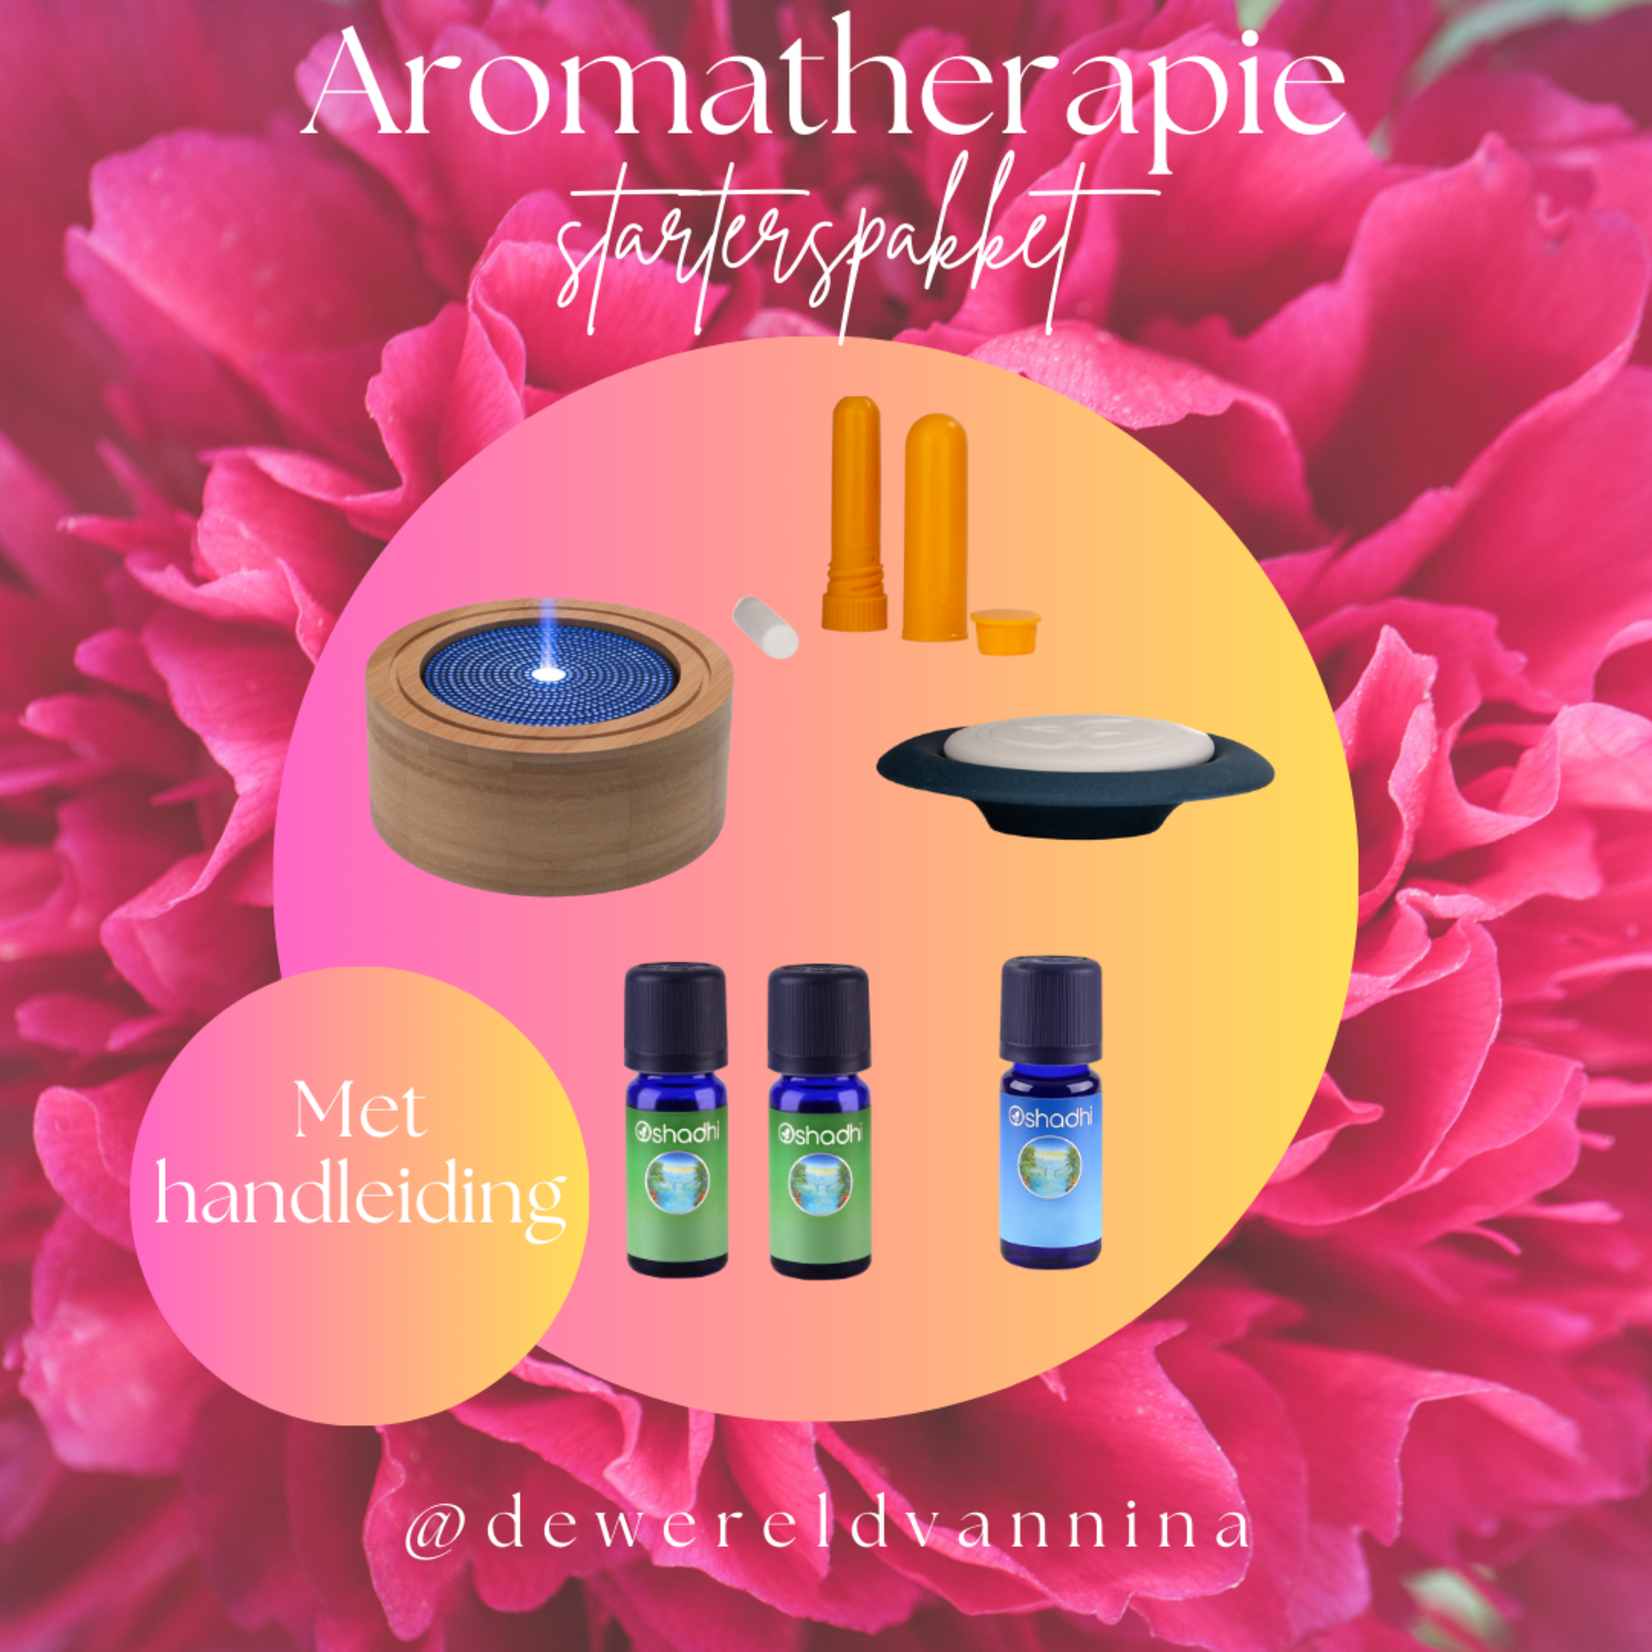 Starterspakket aromatherapie - met bestsellers